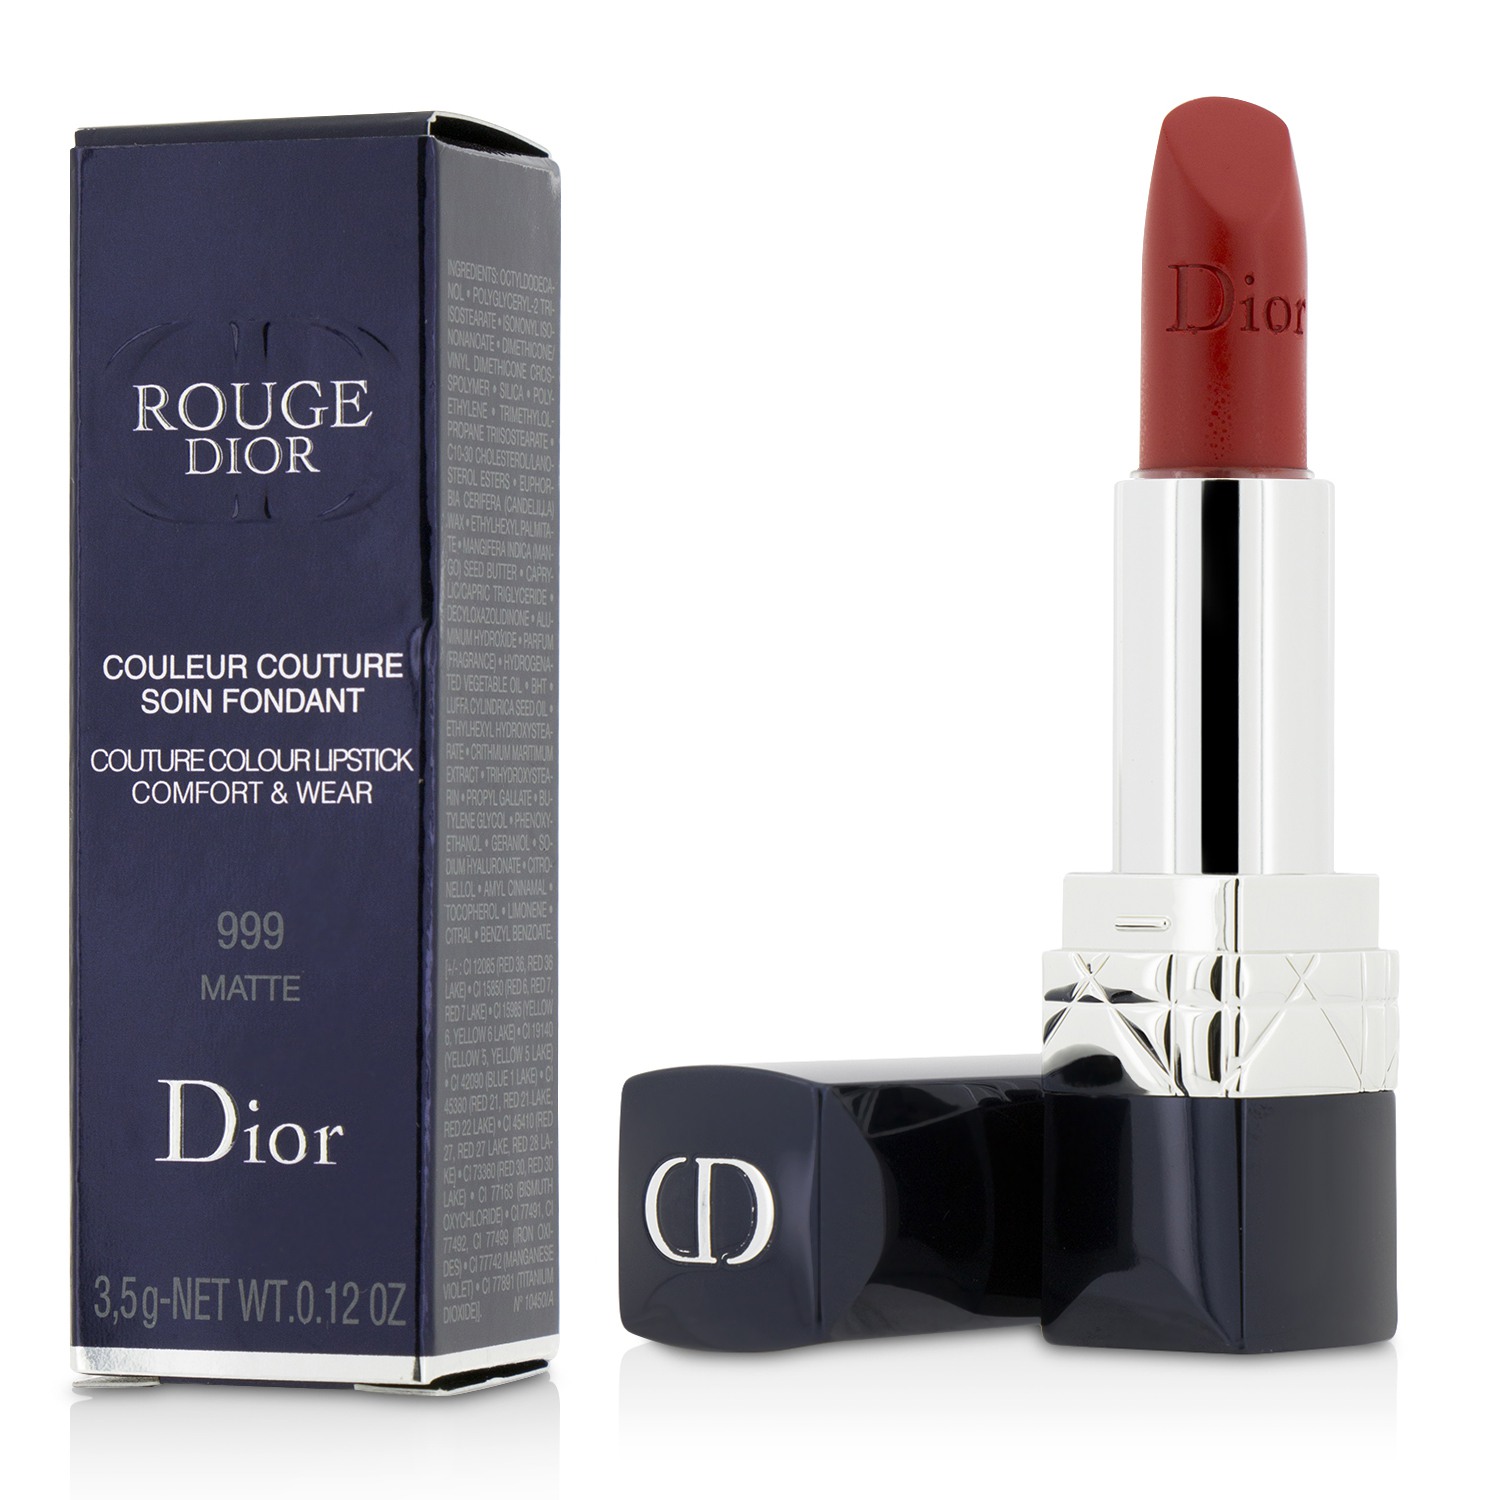 Rouge Dior Couture Colour Comfort & Wear Matte Lipstick - # 999 Matte Christian Dior Image